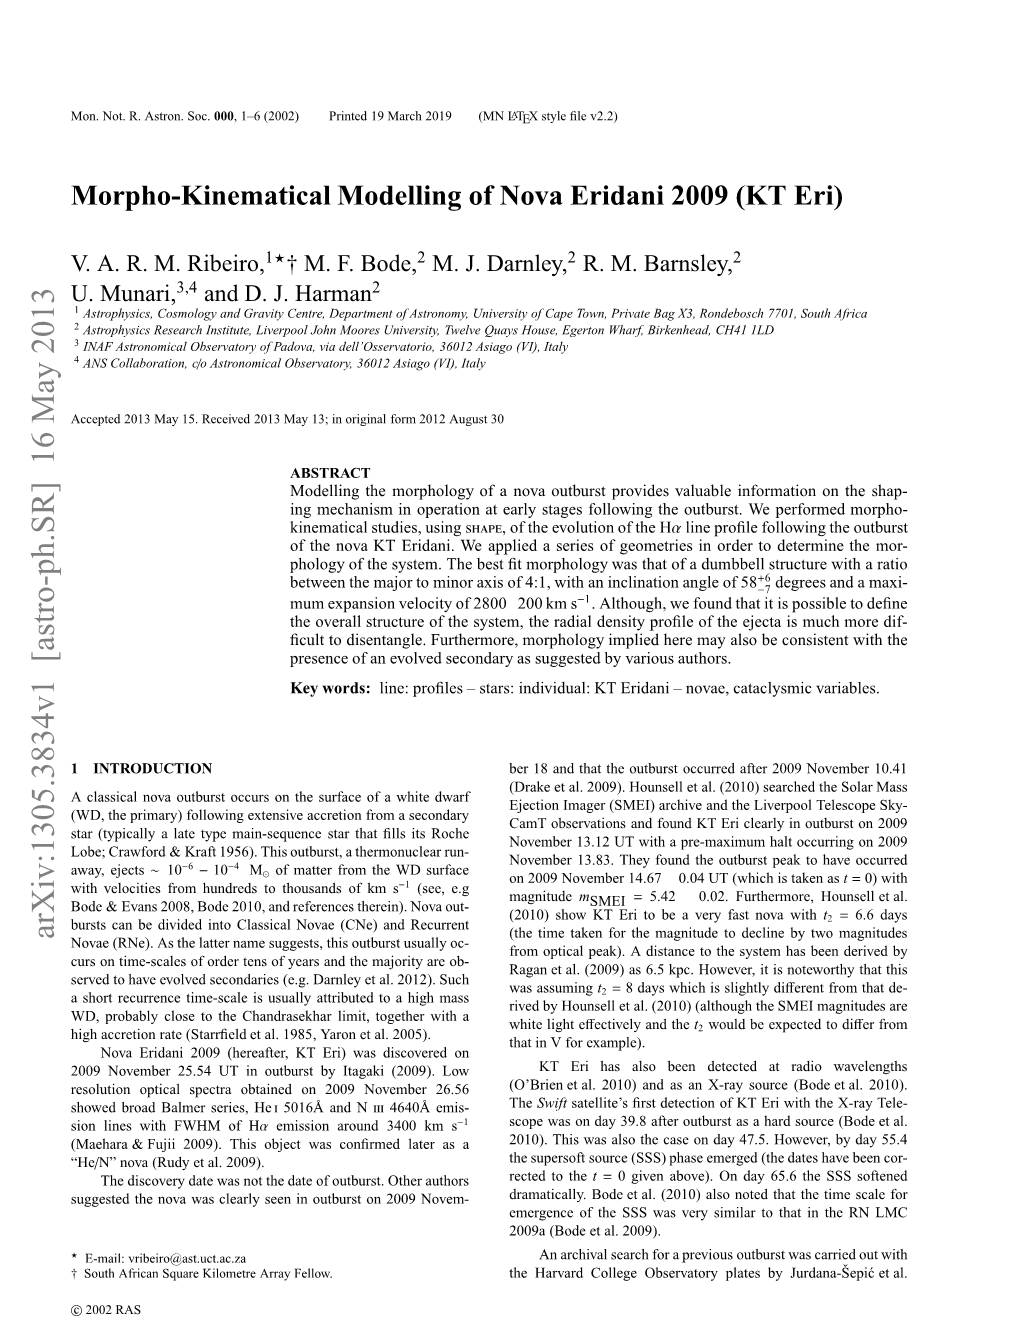 Morpho-Kinematical Modelling of Nova Eridani 2009 (KT Eri)